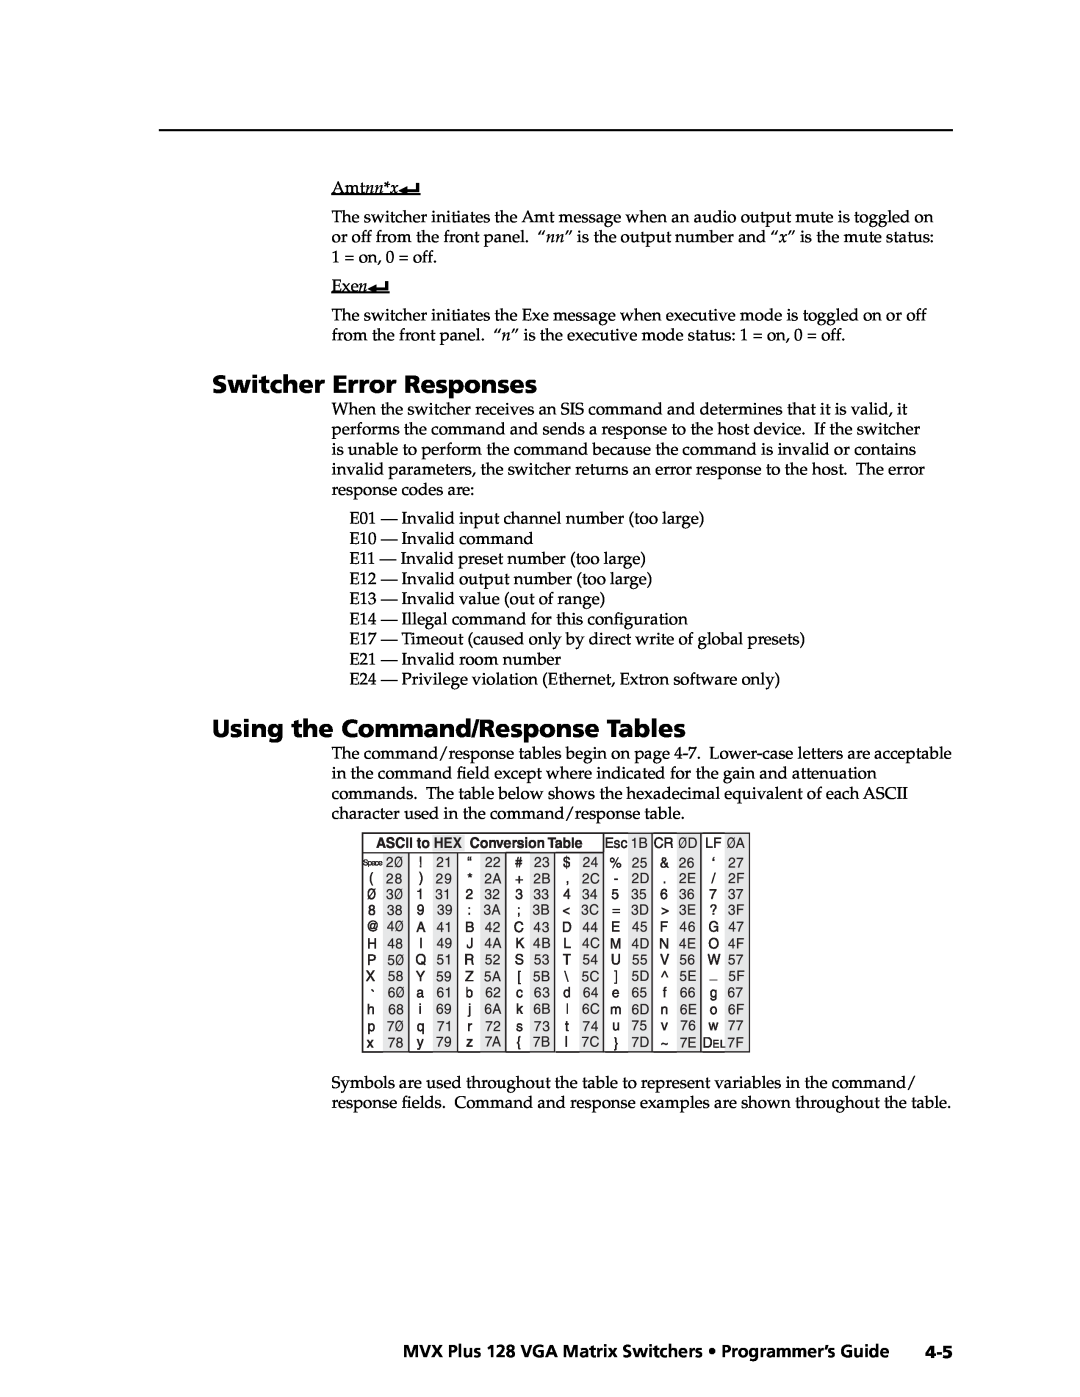 Extron electronic MVX PLUS 128 manual Switcher Error Responses, Using the Command/Response Tables 